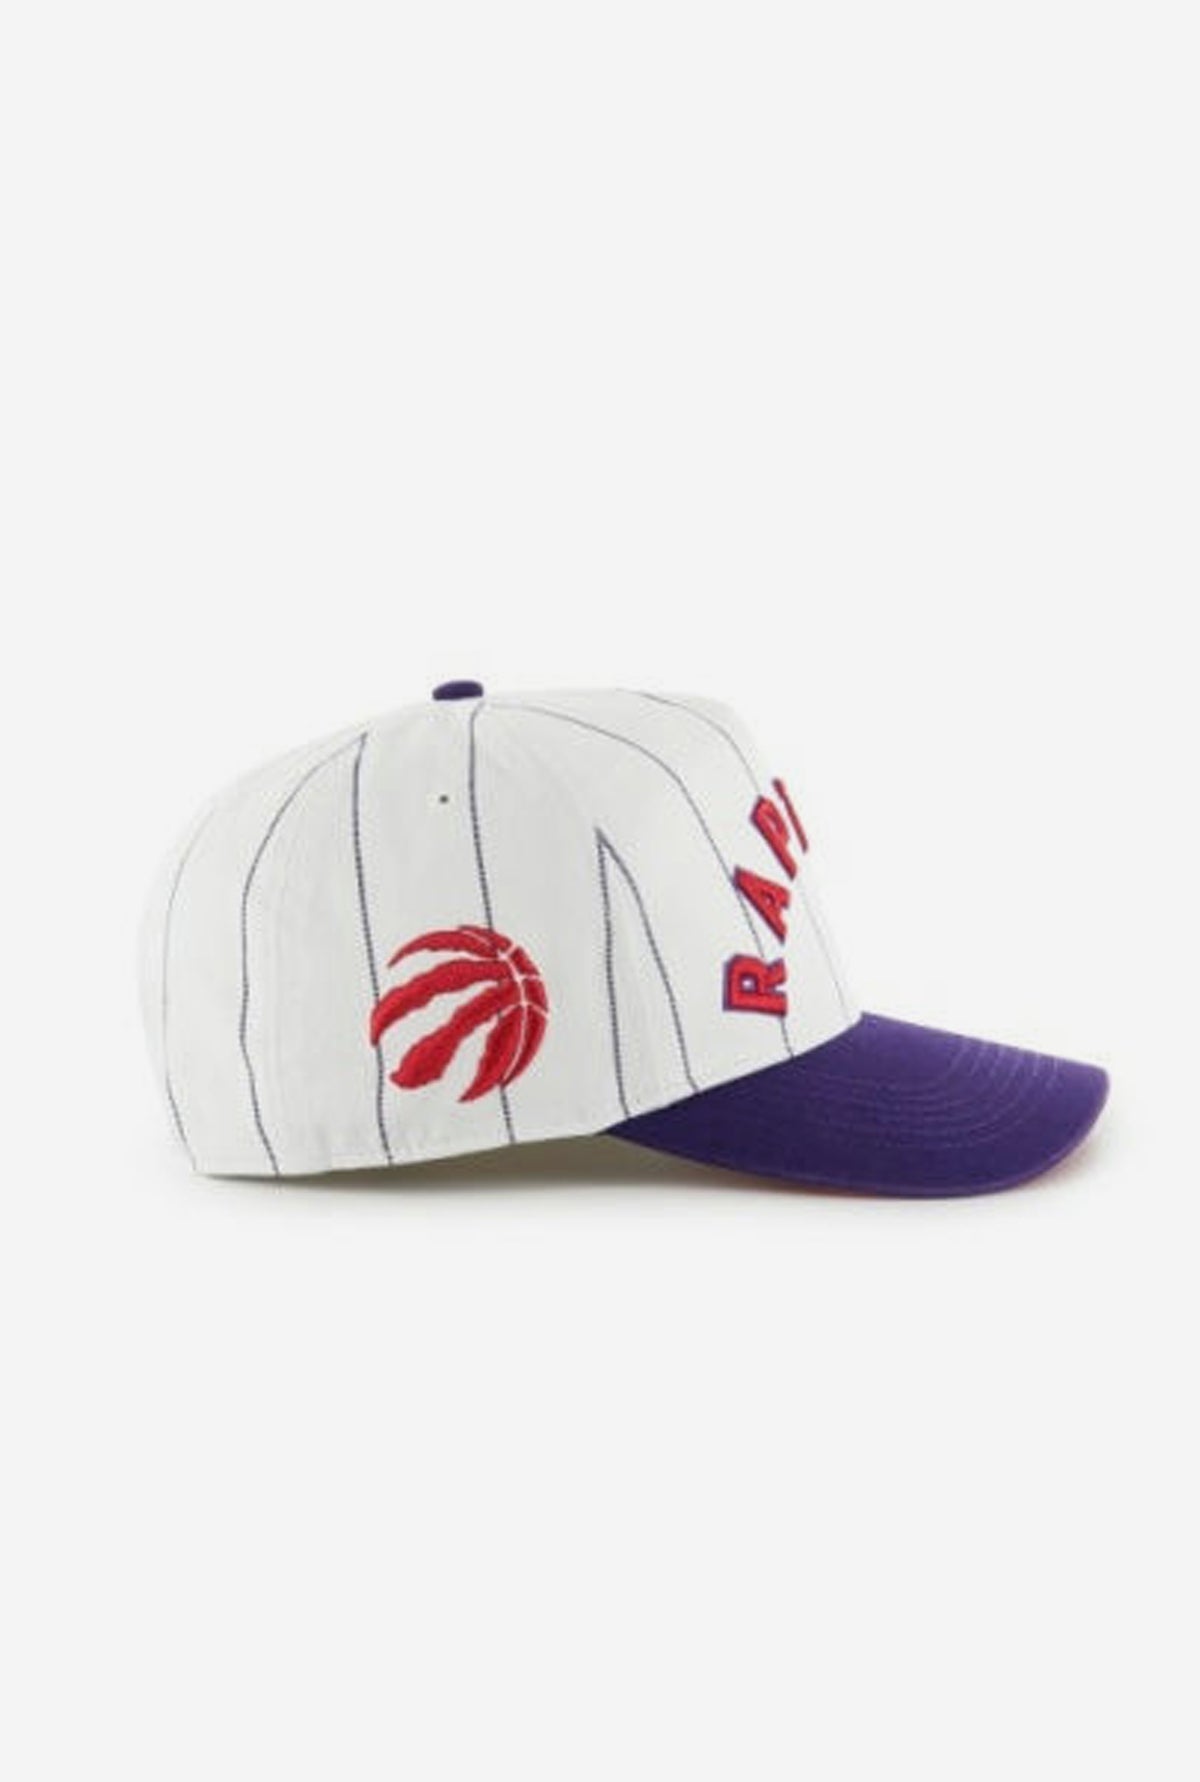 Toronto Raptors Double Header Pinstripe Hitch Hat